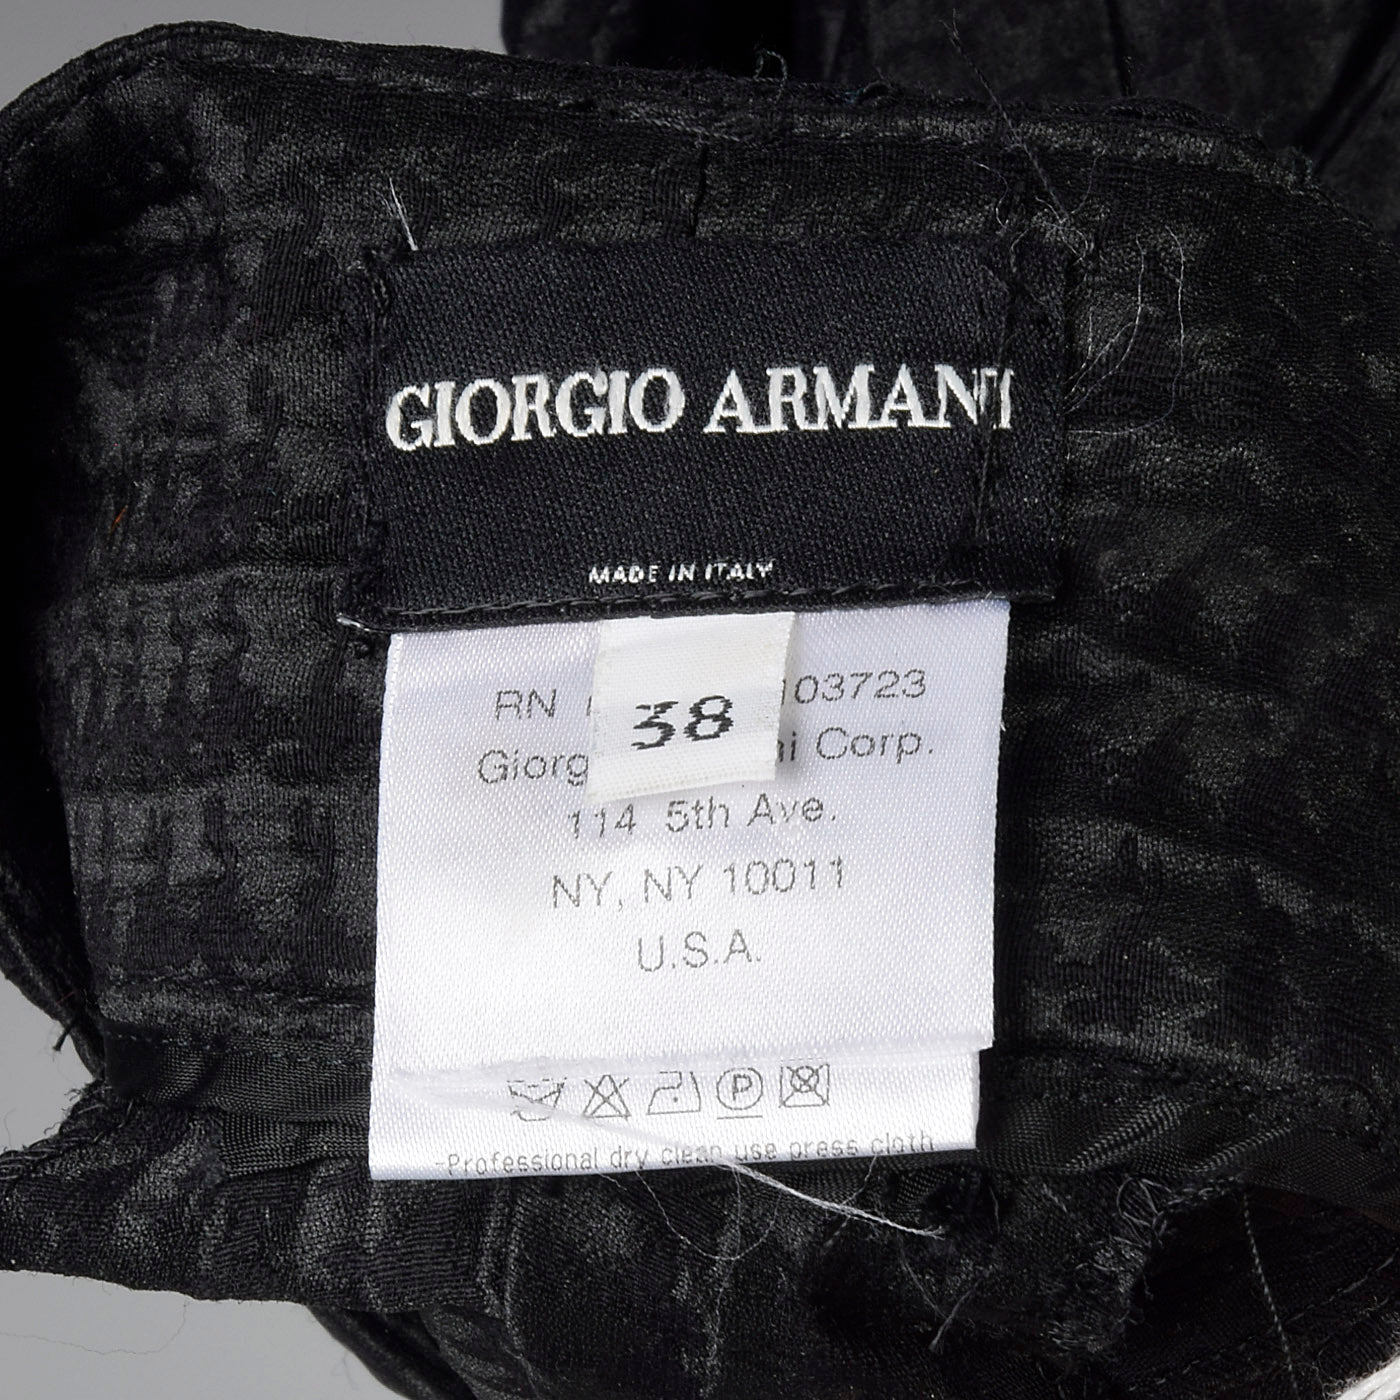 1990s Giorgio Armani Wide Leg Pants in Black on Black Houndstooth